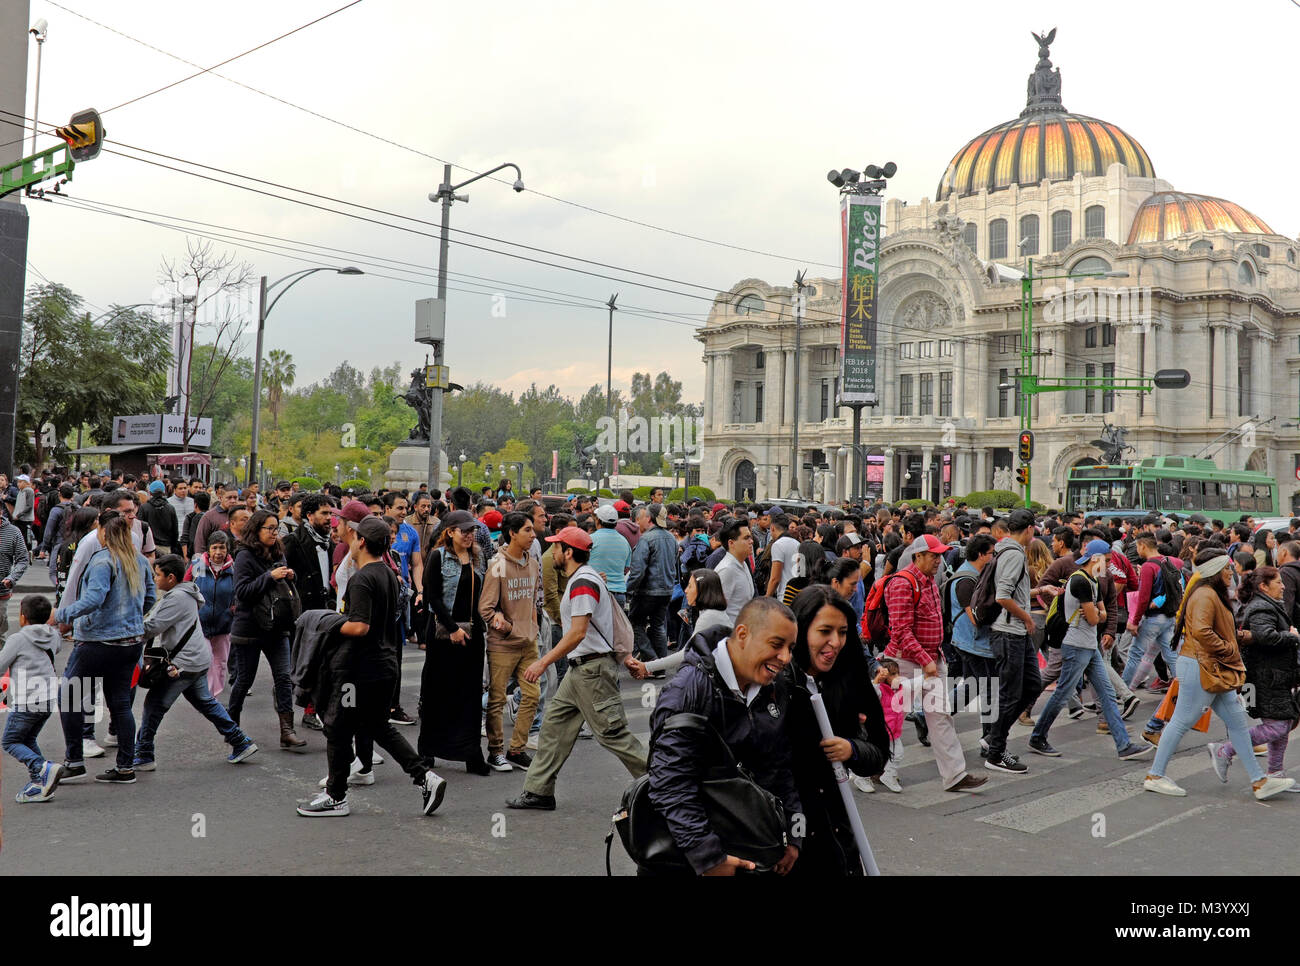 Crowds cross the street in front of the Palacio de Bellas Artes building in Mexico City, Mexico. Stock Photo